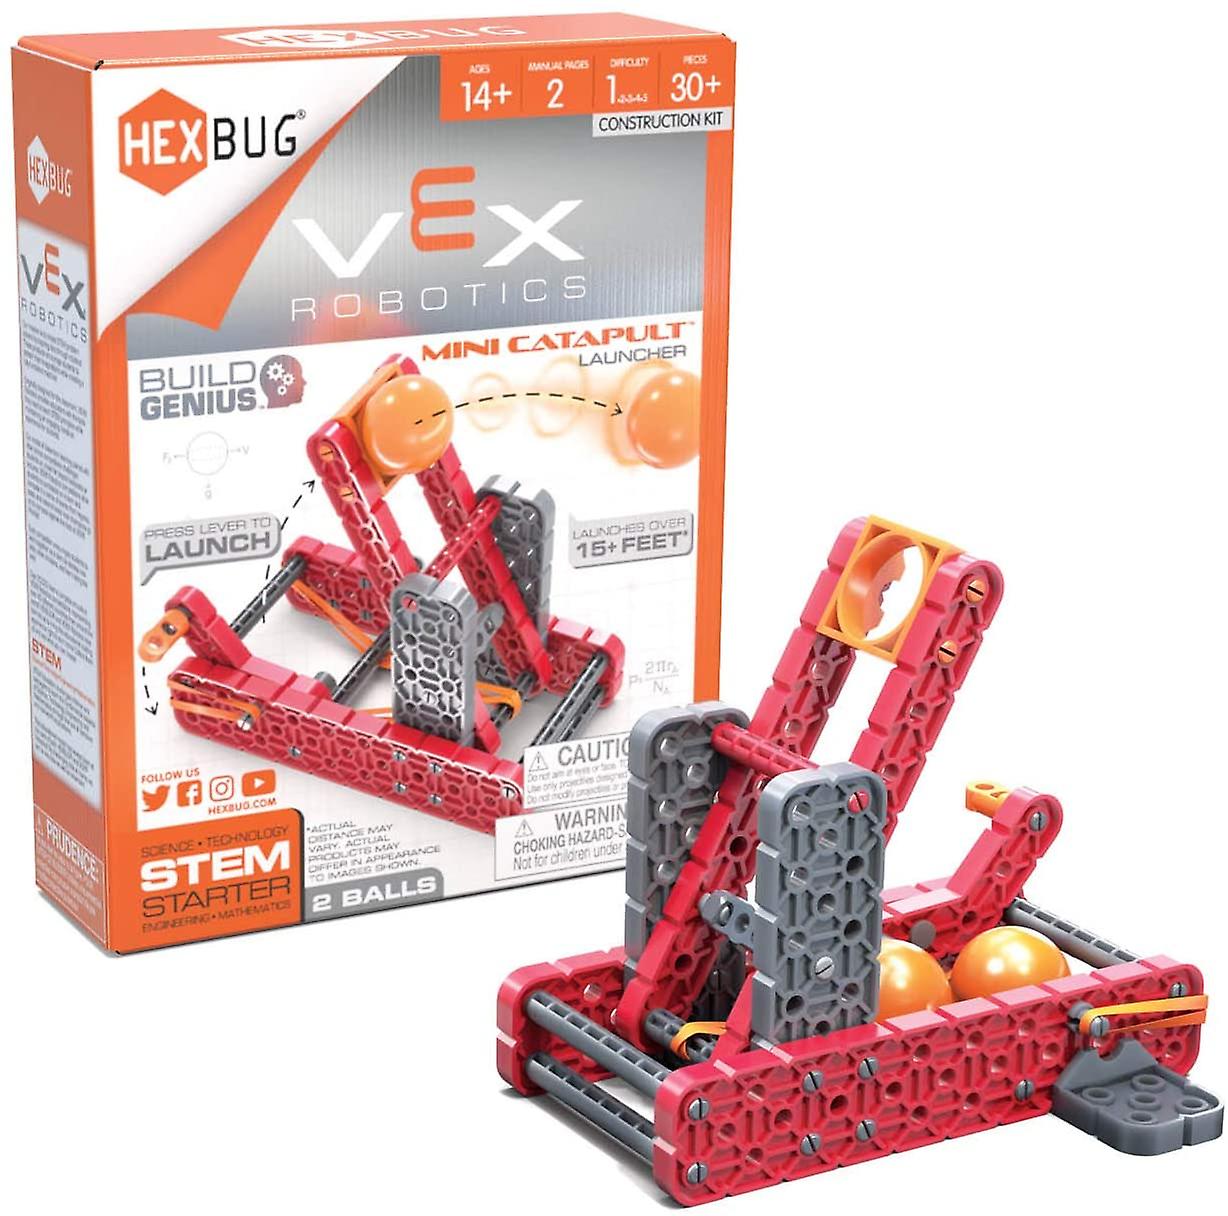 Hexbug Vex Robotics Mini Catapult Launcher